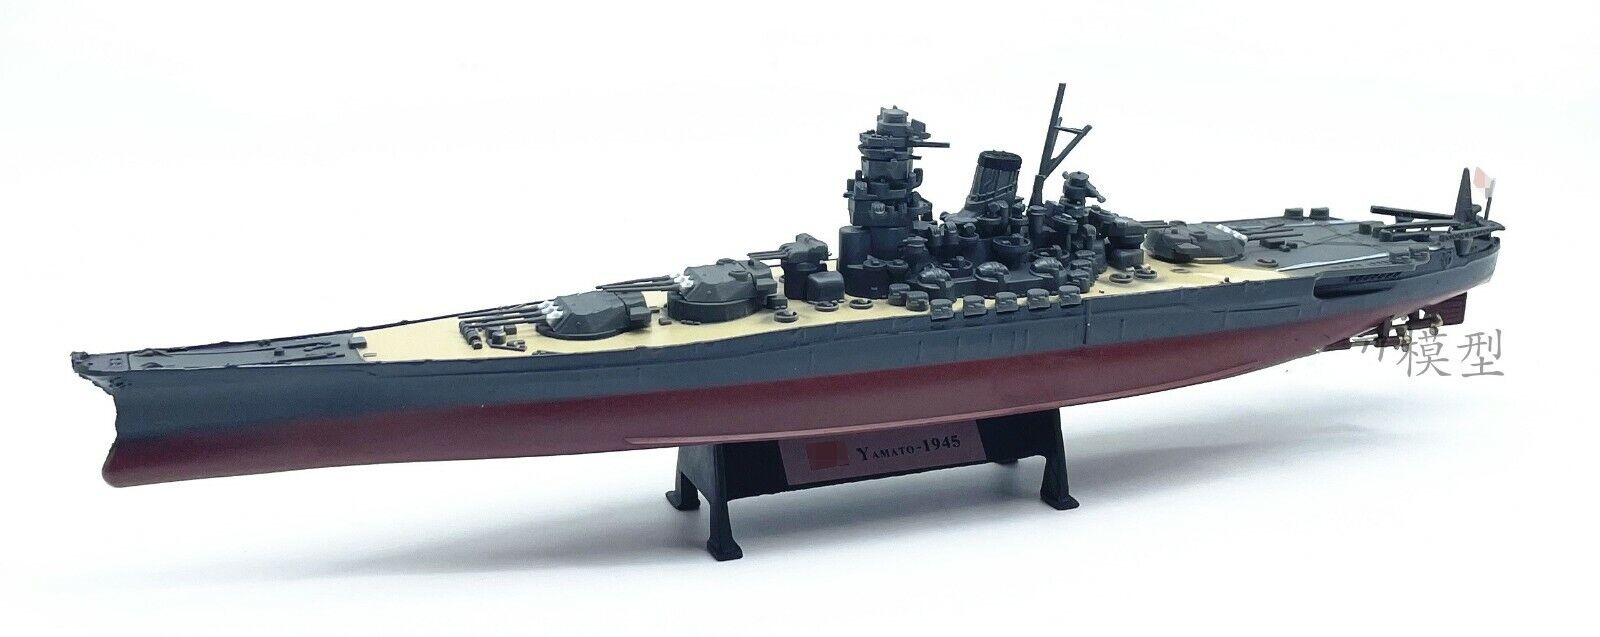 1:1000 AMER YAMATO-1945 WWII Battleship Diecast Warship Model Co